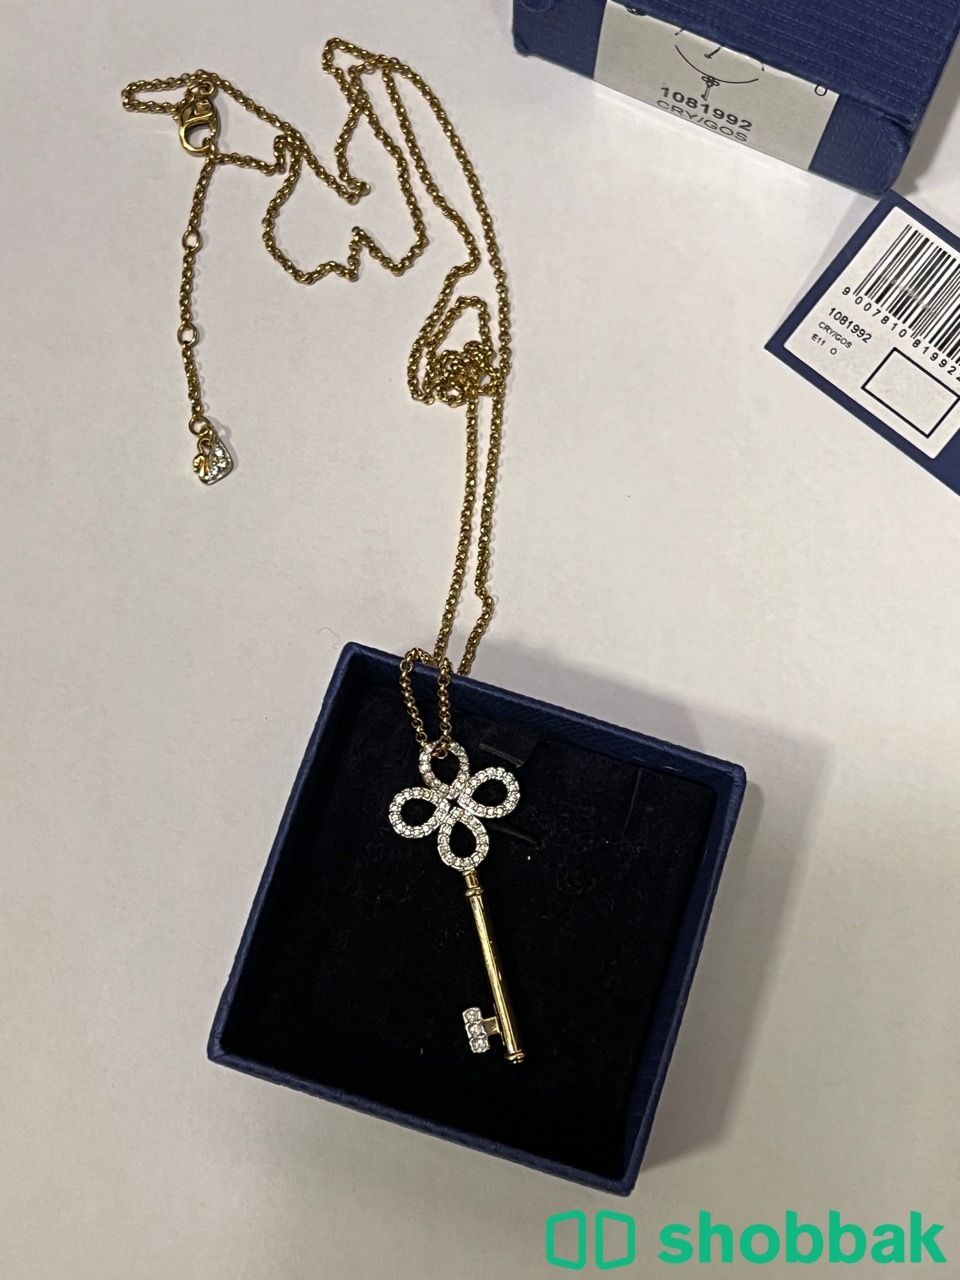 Swarovski Key Necklace. عقد مفتاح شوارفسكي. شباك السعودية